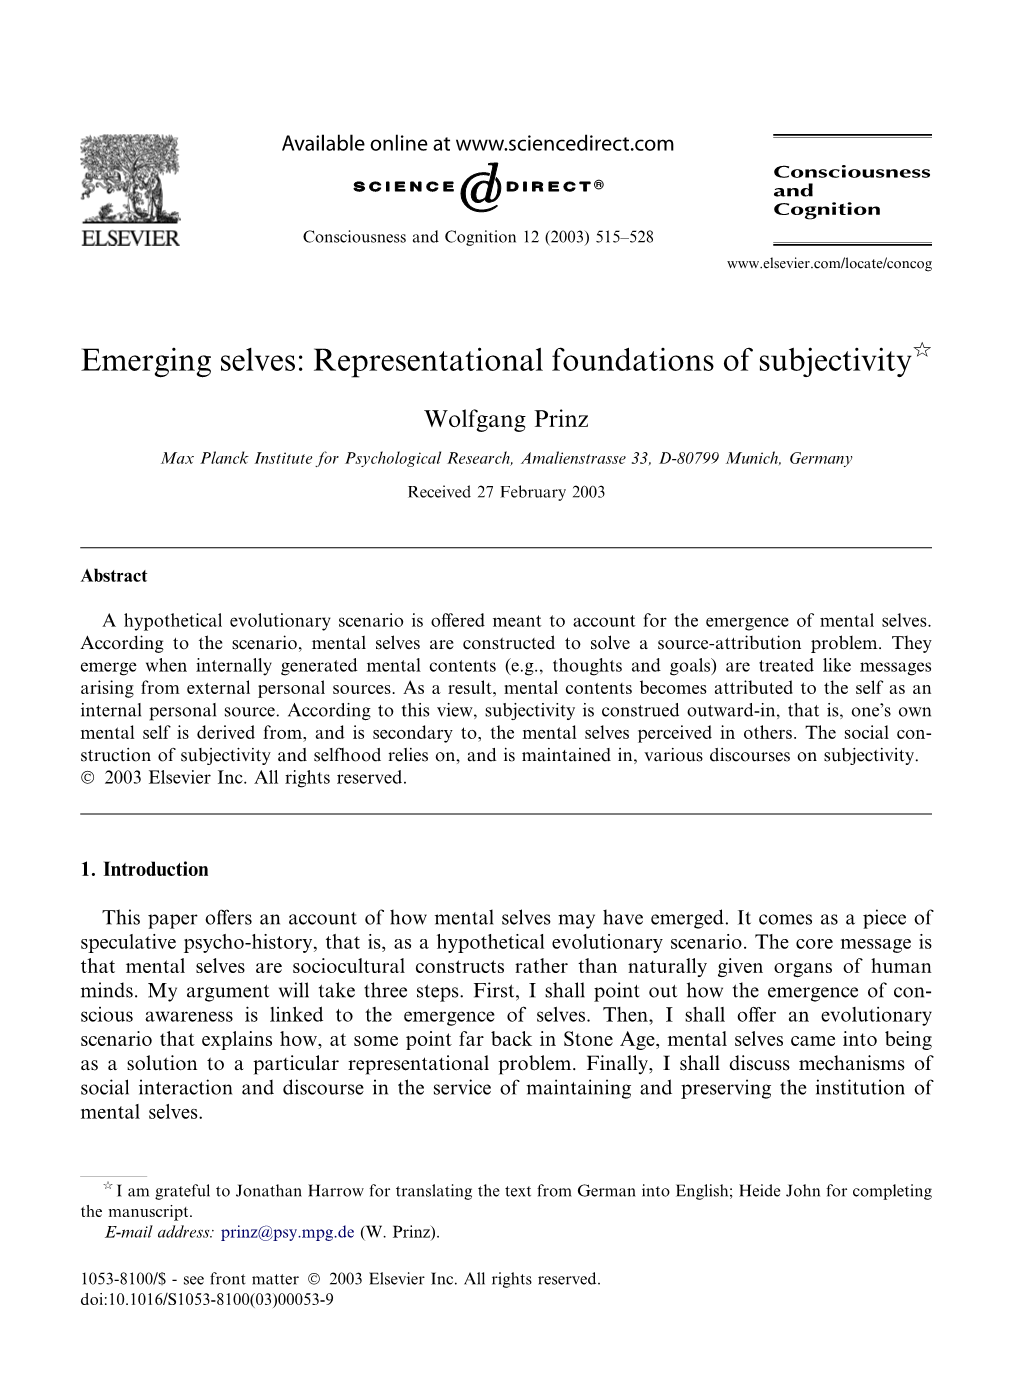 Representational Foundations of Subjectivityq